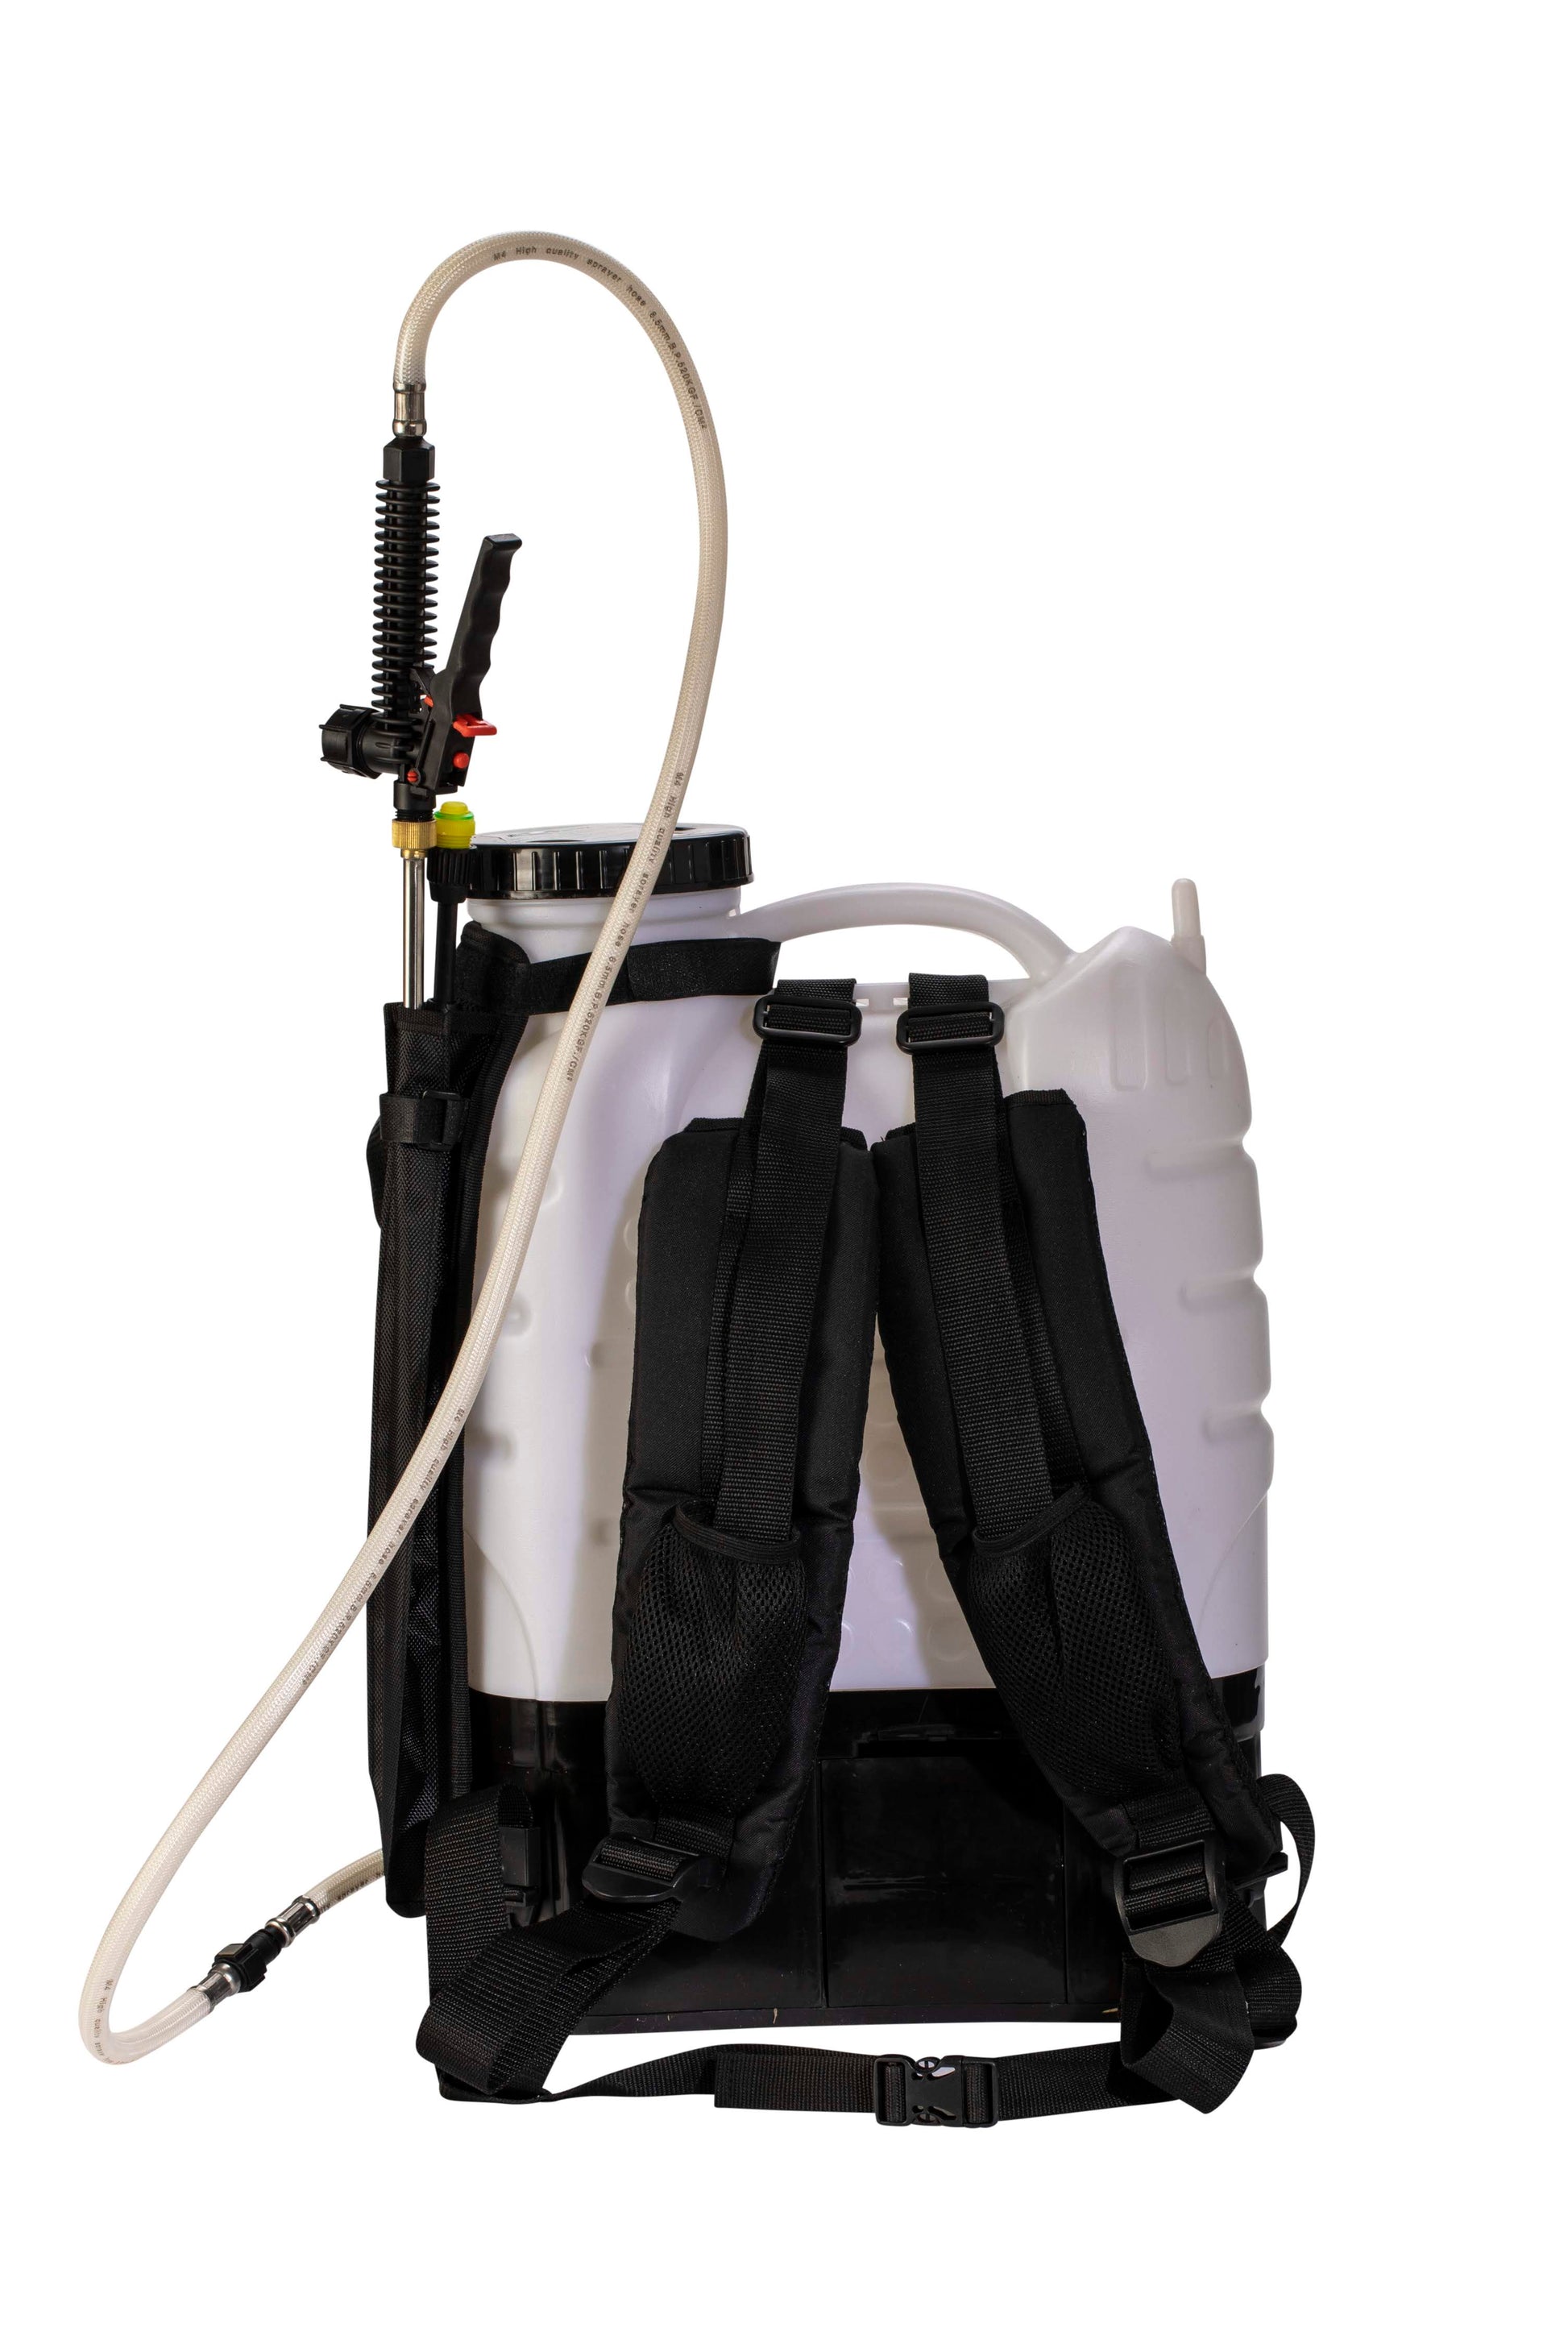 Black+Decker Battery Powered 4-Gal Backpack Sprayer